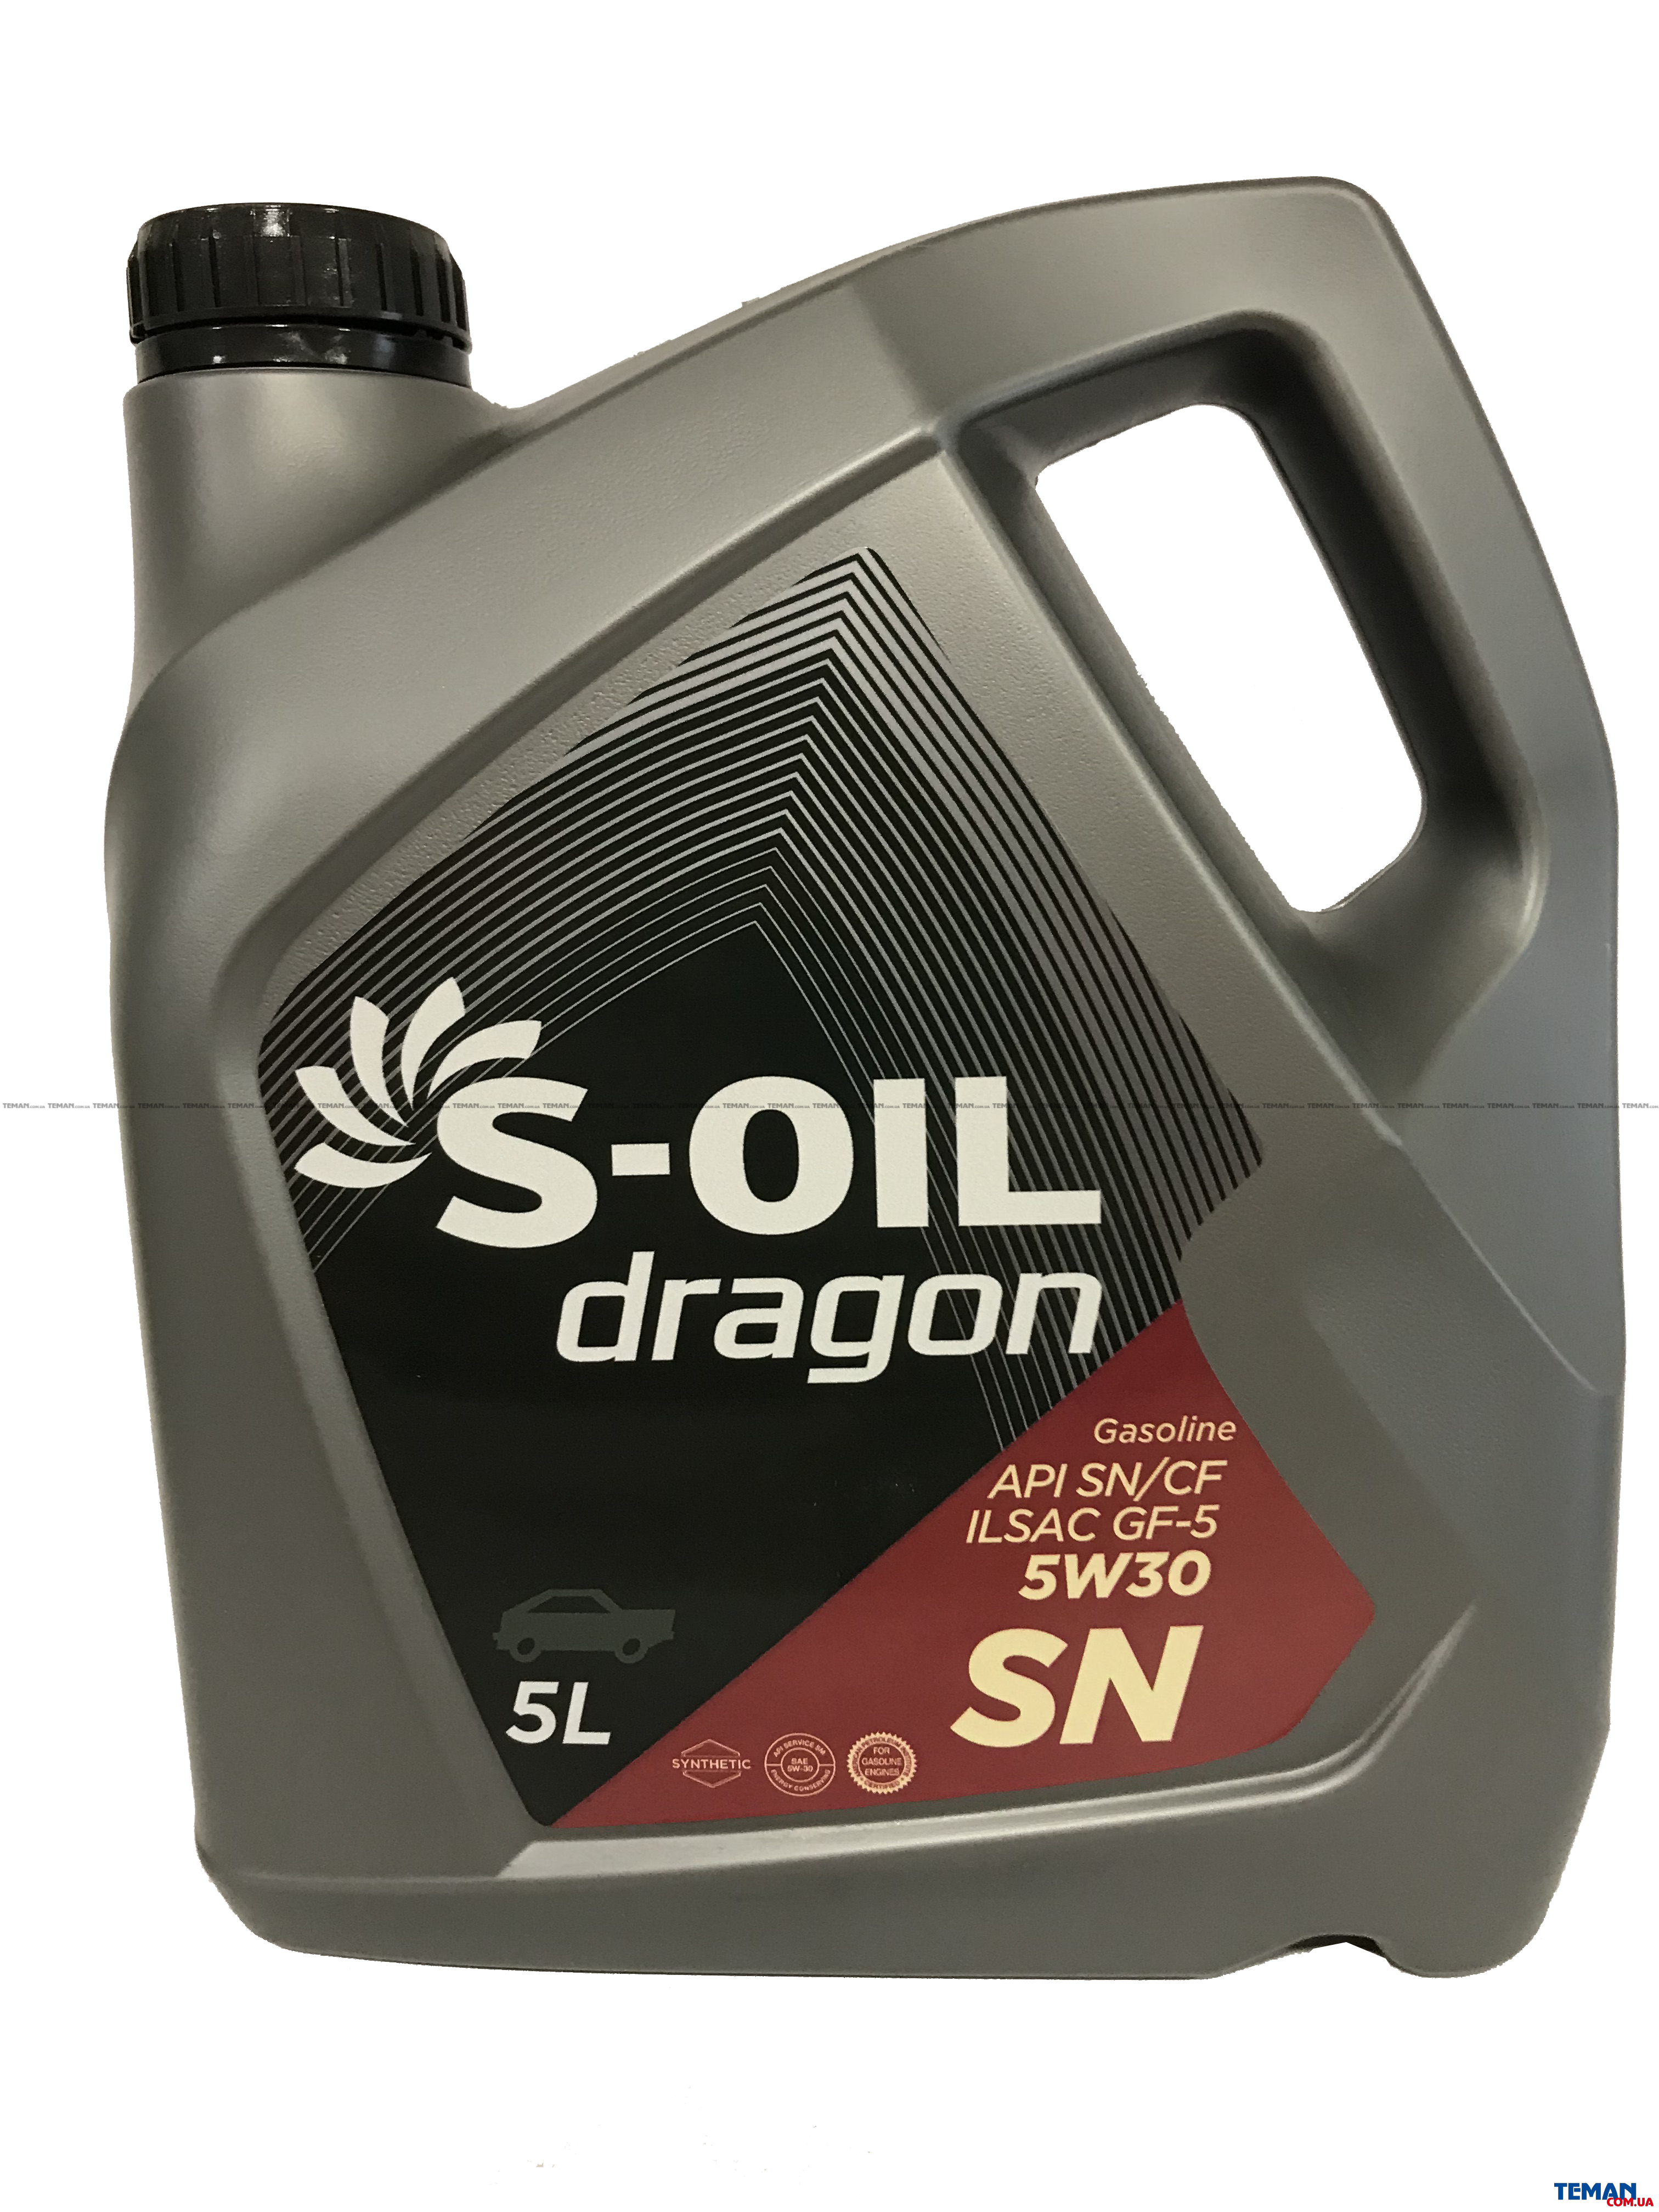 S-Oil Seven Dragon 5w30. S Oil Dragon 5w30 SN. Масло моторное 5w30 Dragon. S-Oil Dragon 5w-30 SN gf-5. Масло моторное 5w30 2023